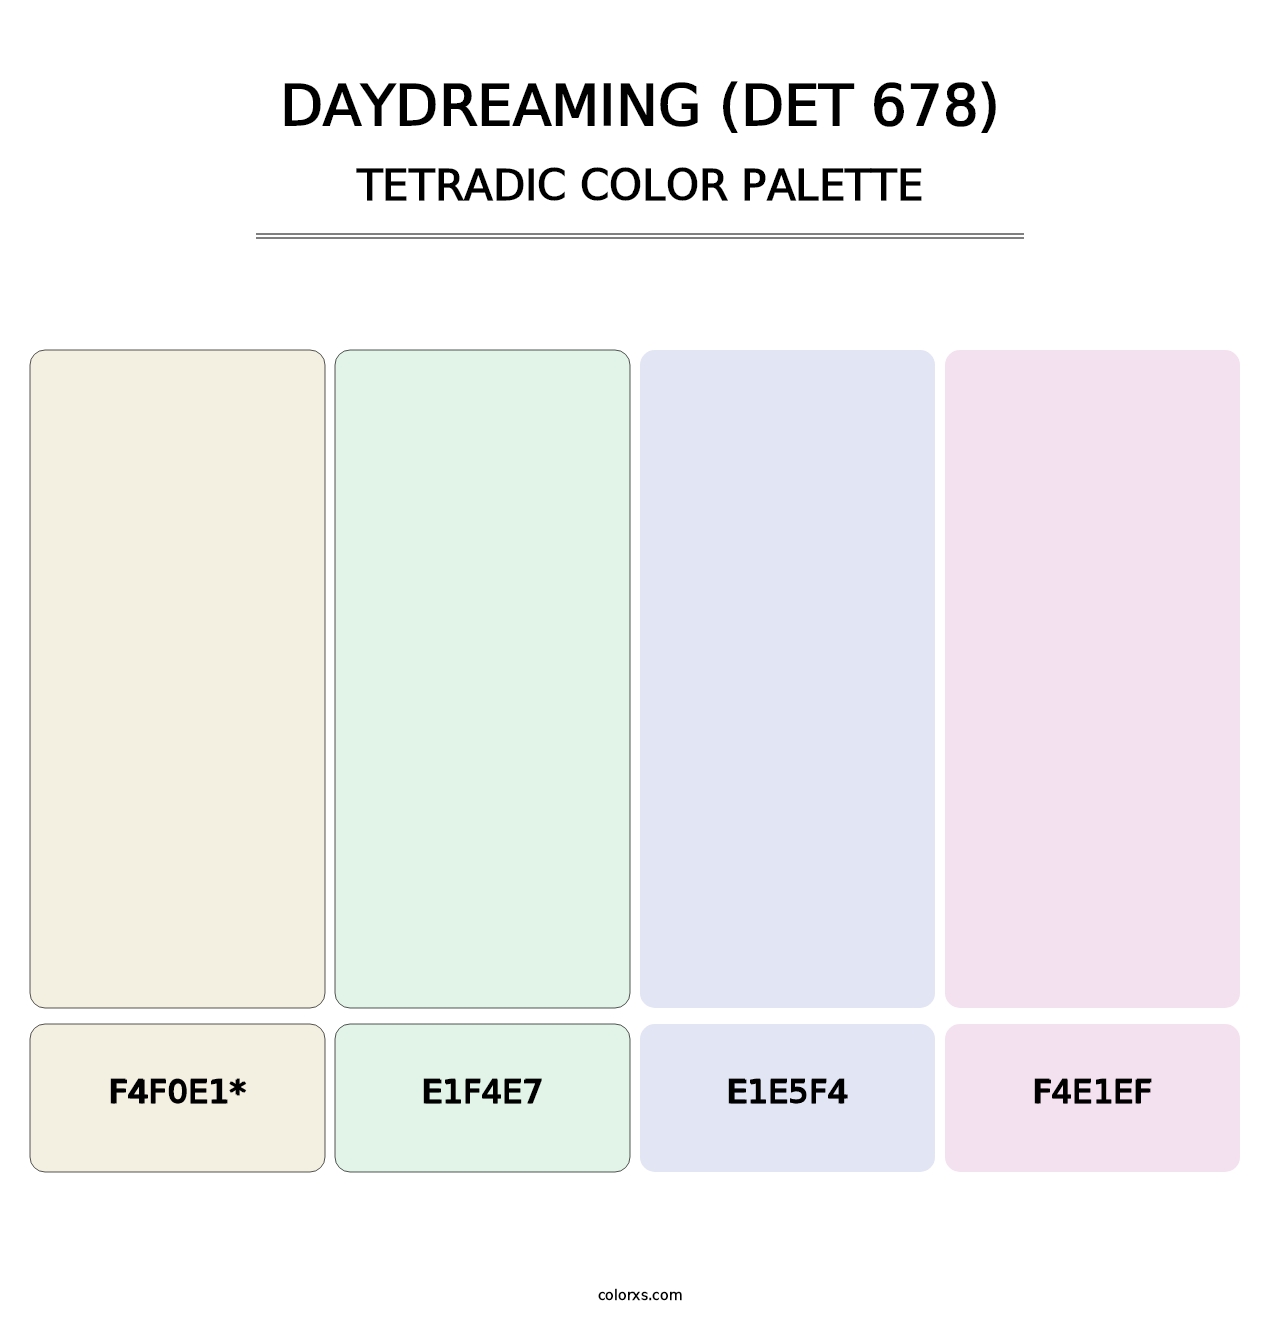 Daydreaming (DET 678) - Tetradic Color Palette